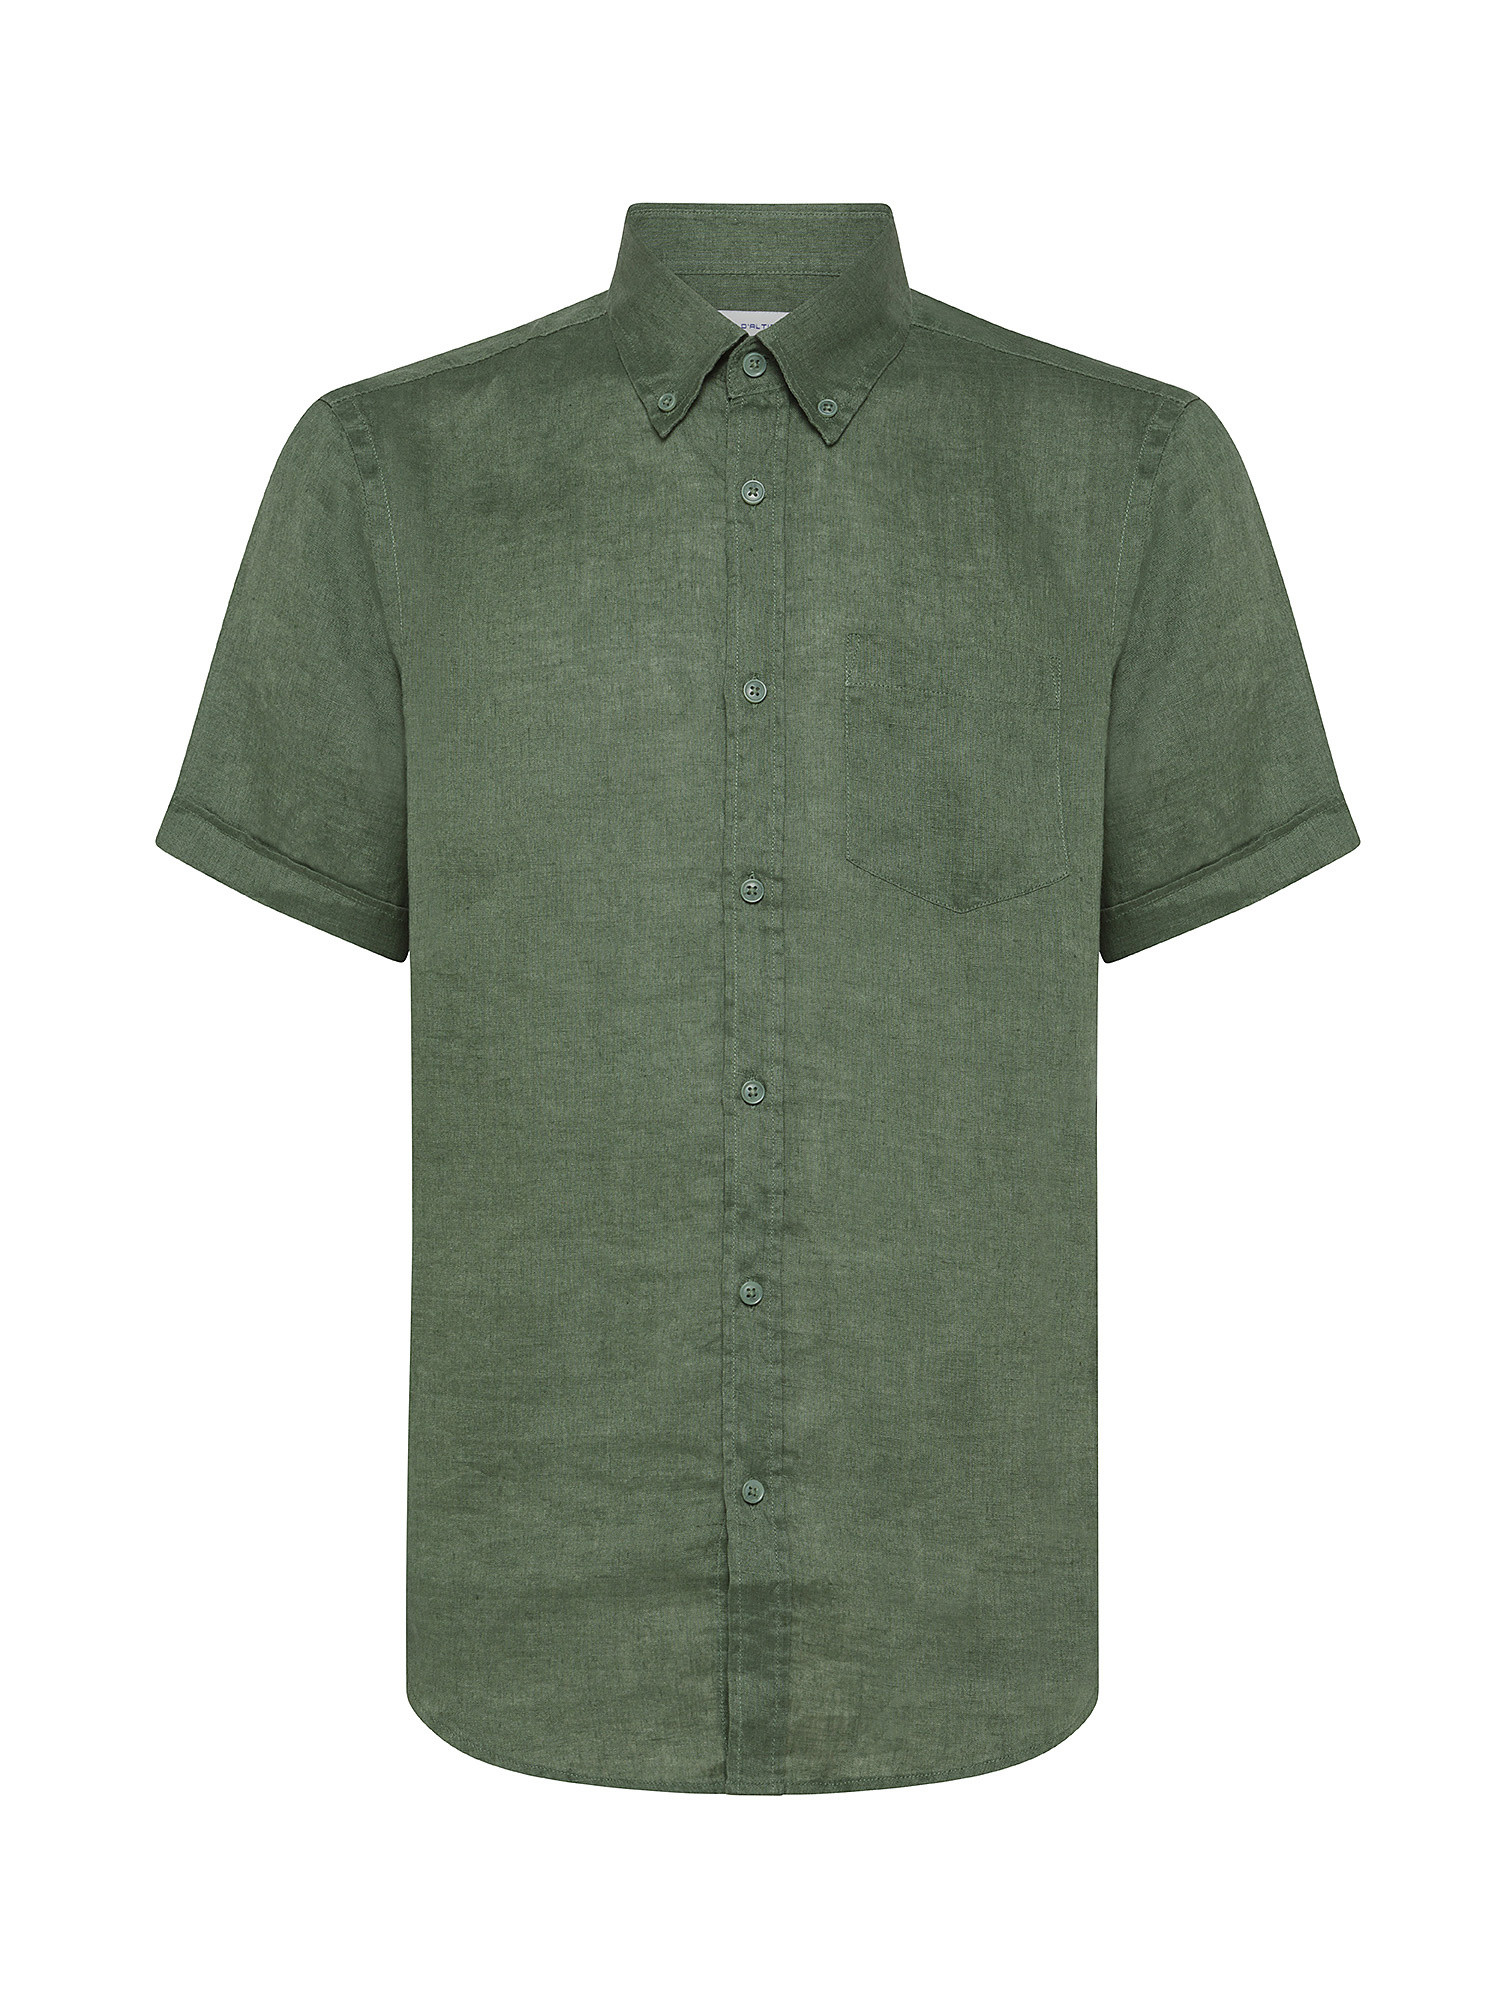 Luca D'Altieri - Regular fit shirt in pure linen, Green, large image number 0